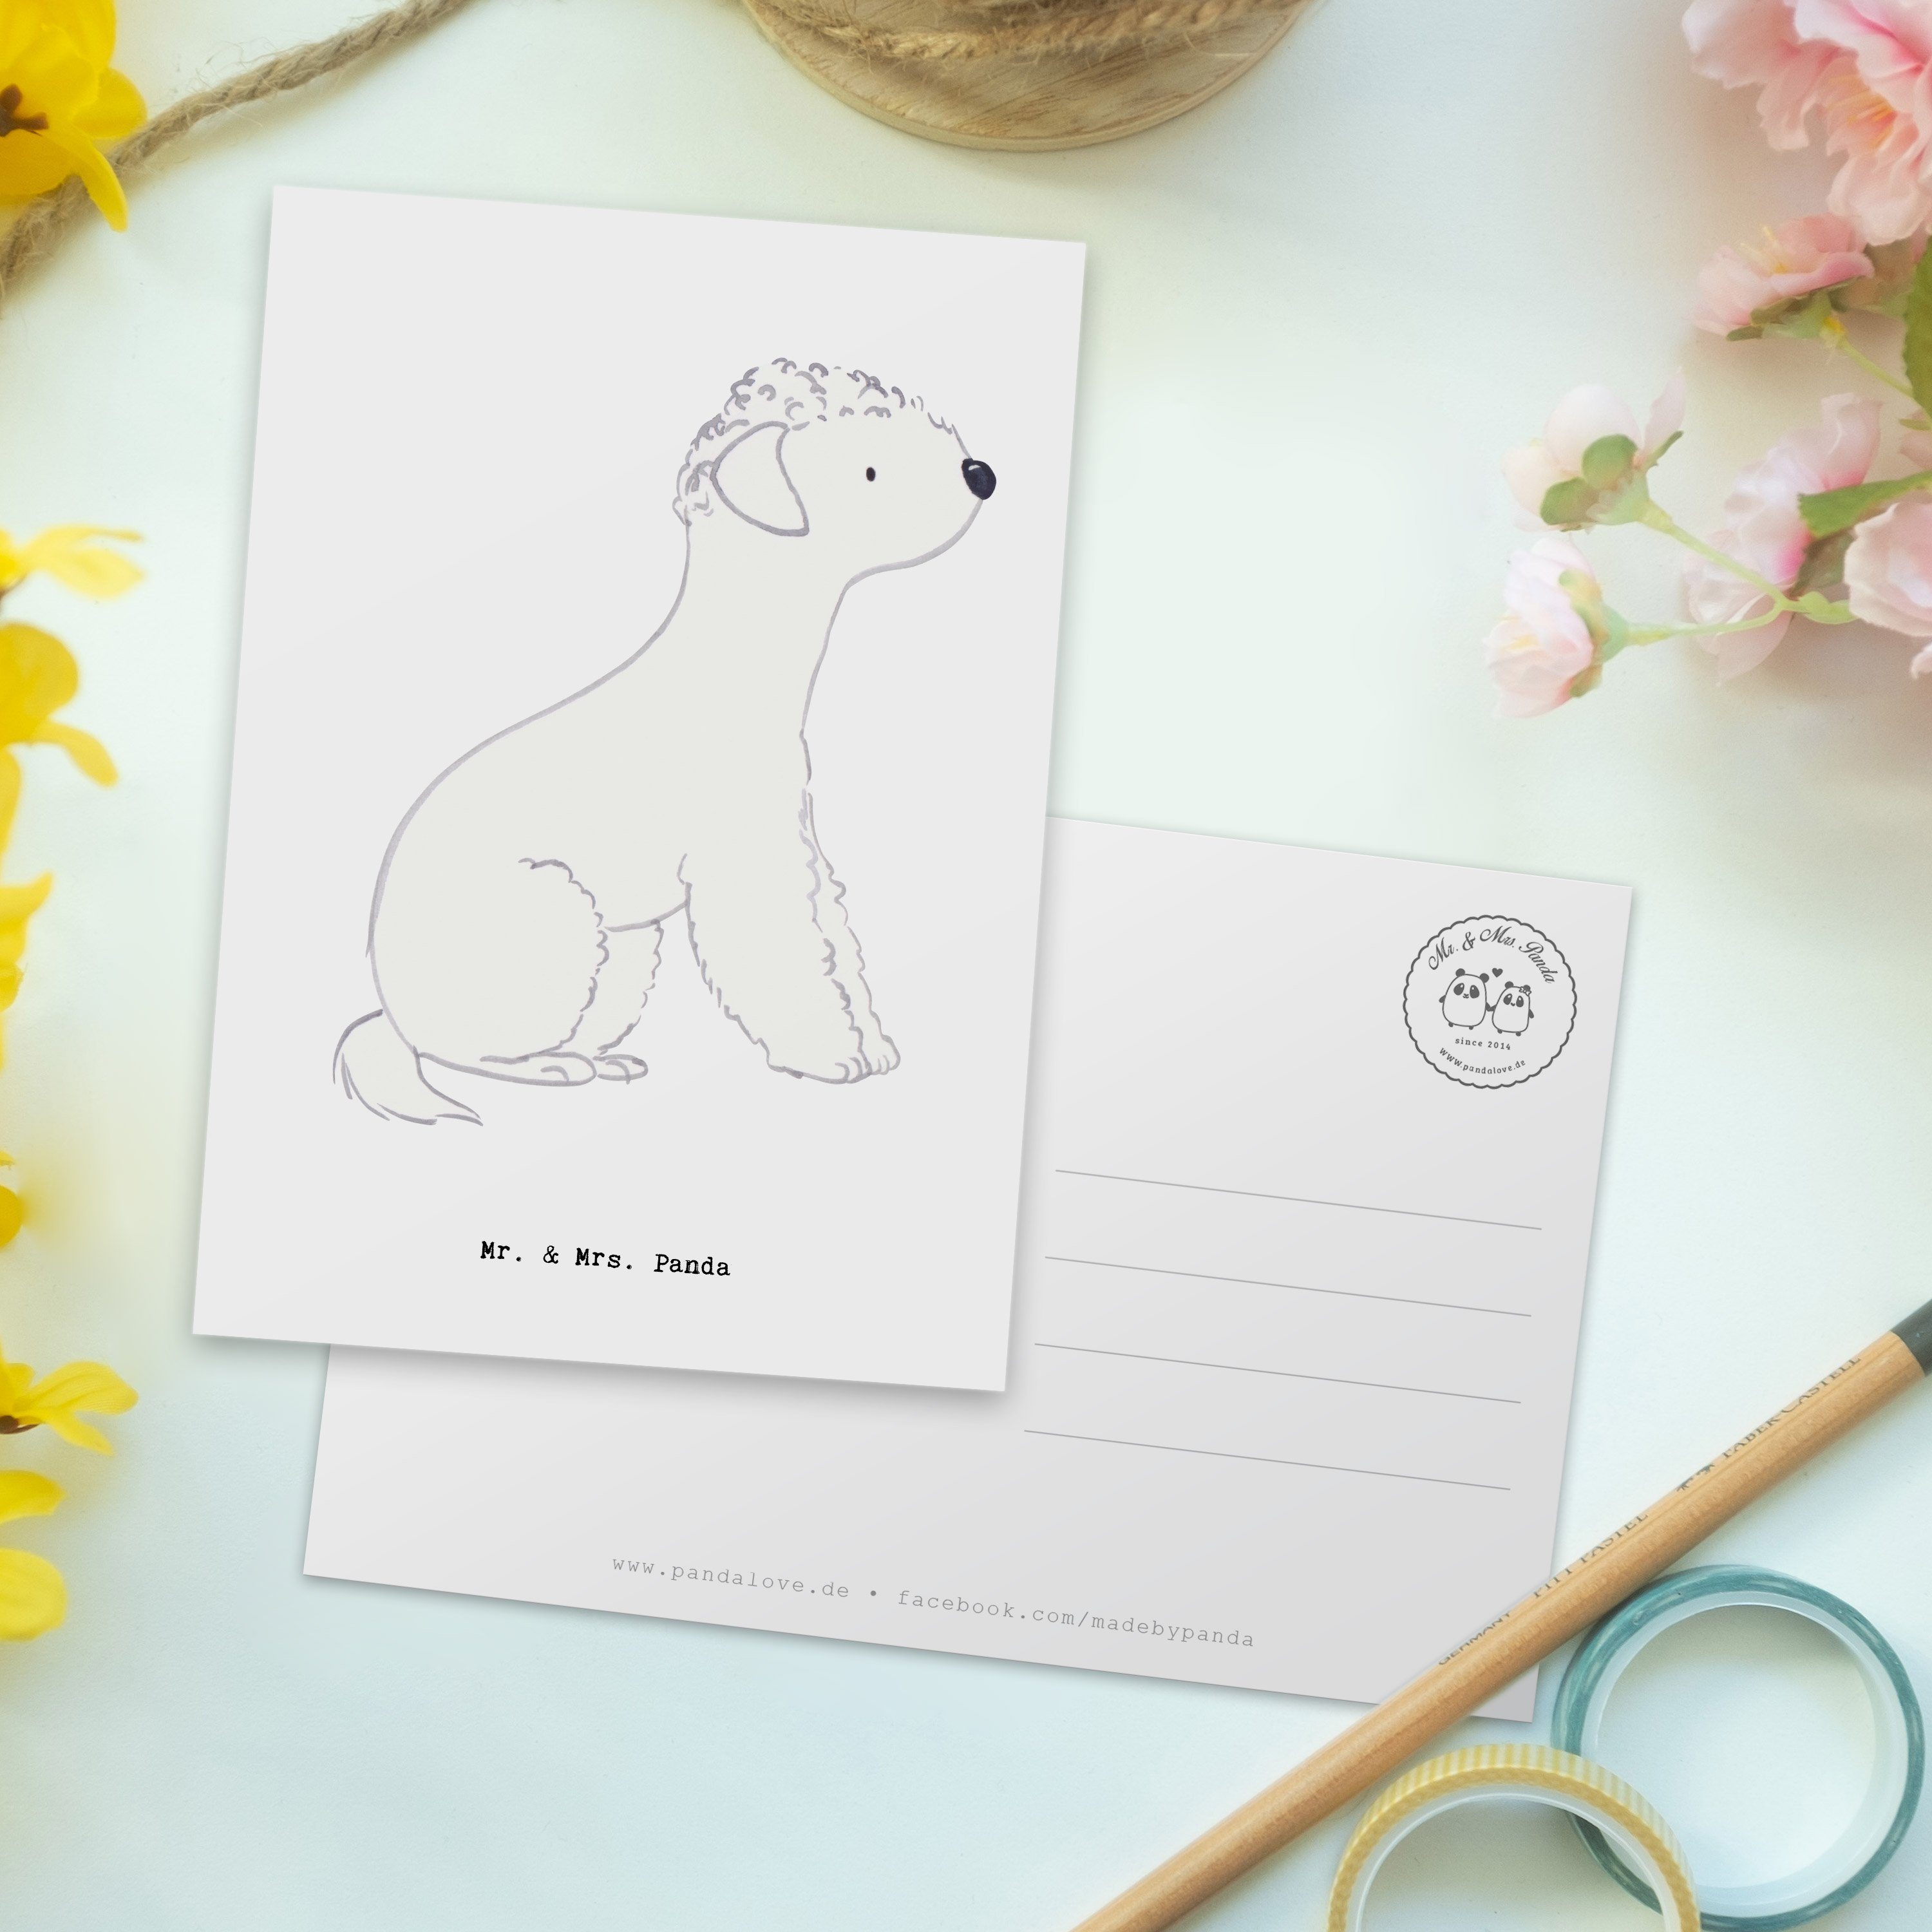 Mrs. Bedlington Terrier - Panda Lebensretter - Postkarte Weiß Geschenk, Karte, Einladung & Mr.